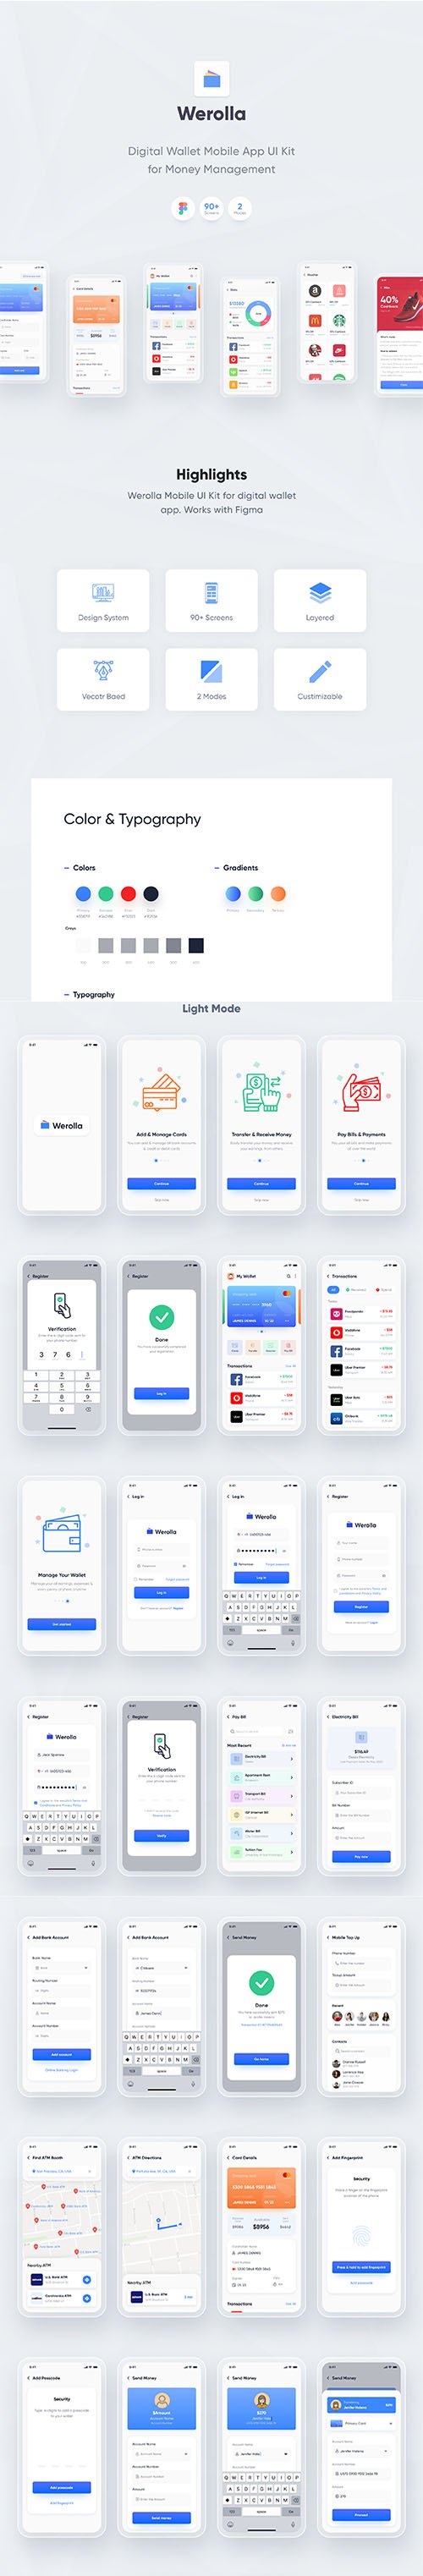 Werolla - Mobile App UI Kit for Wallet, Finance & Banking App - UI8